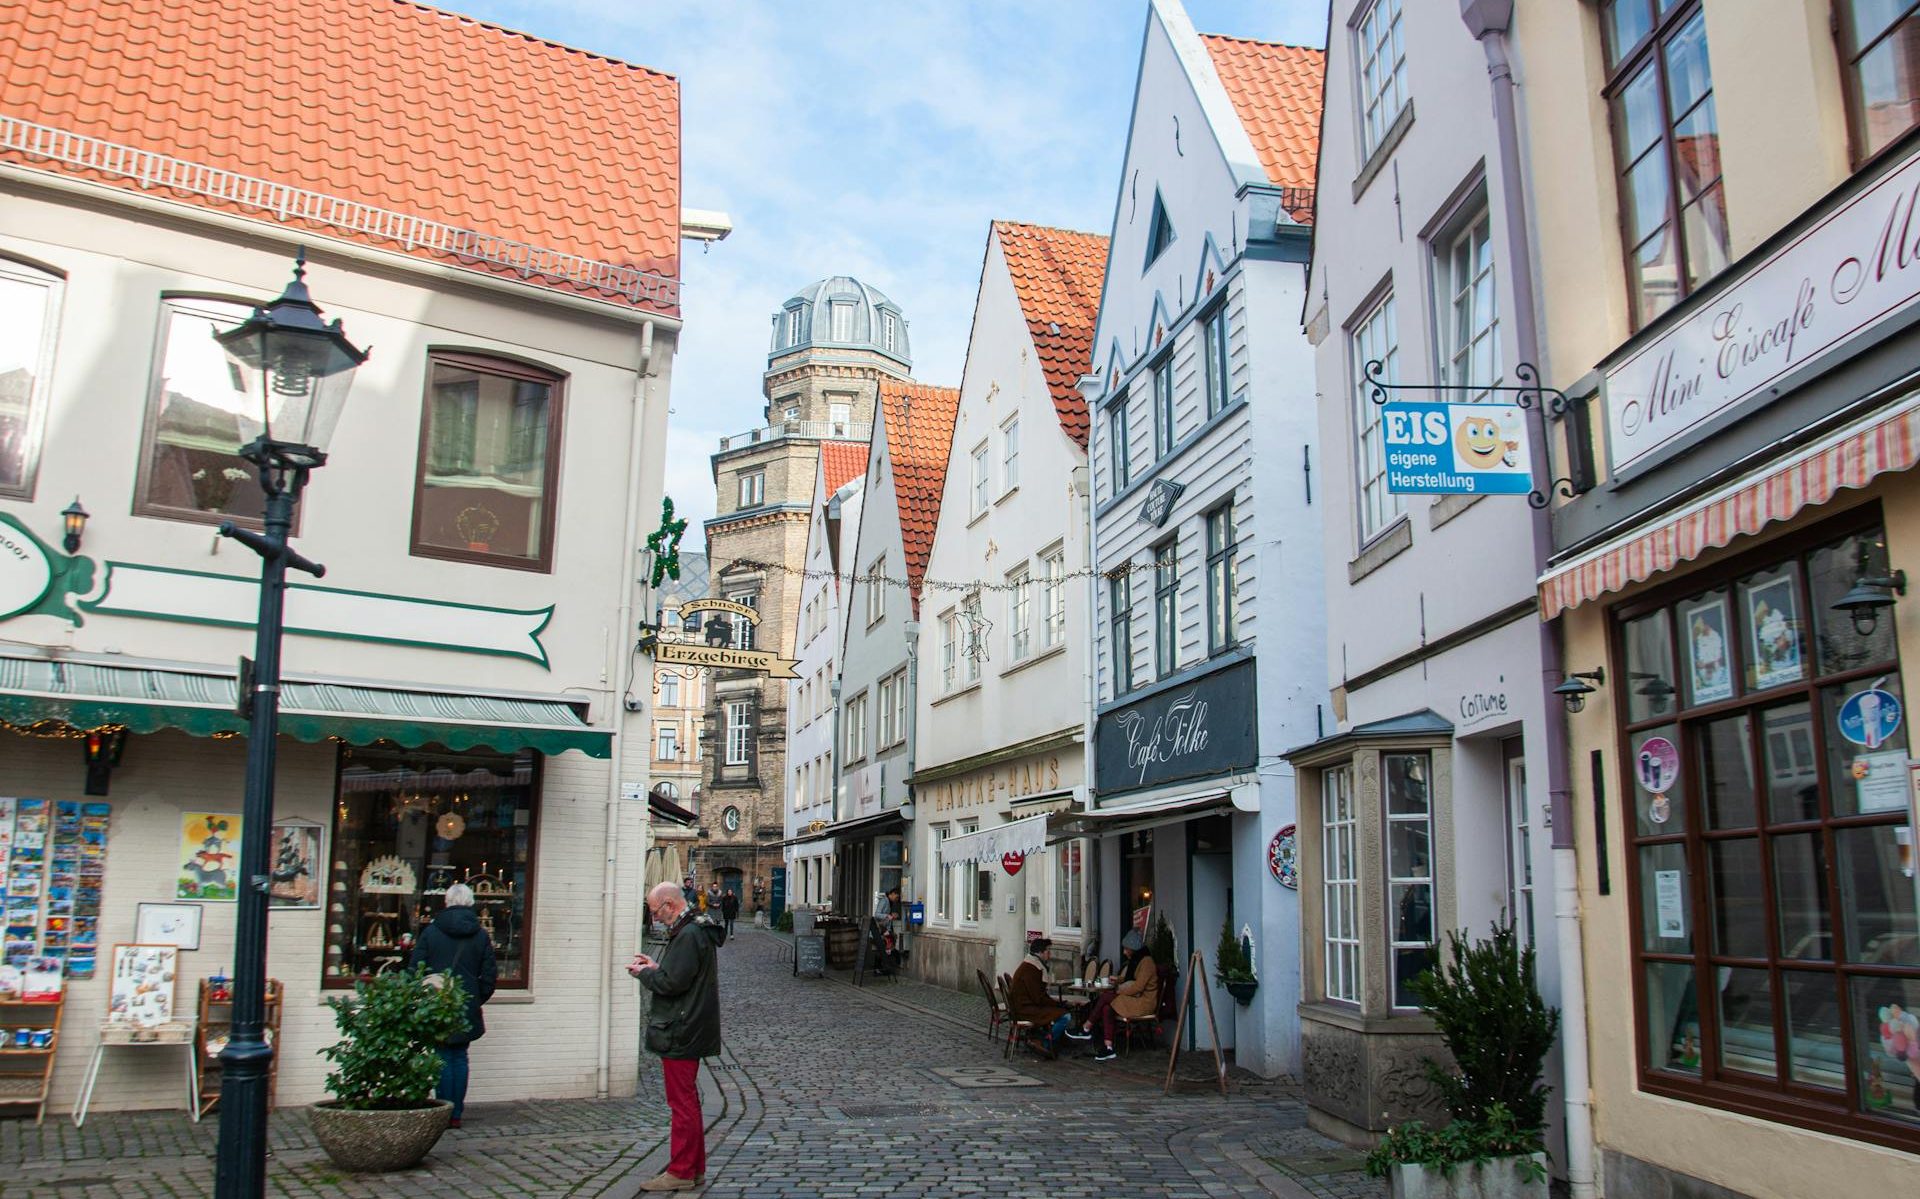 Cobblestone Street in a Town in Germany